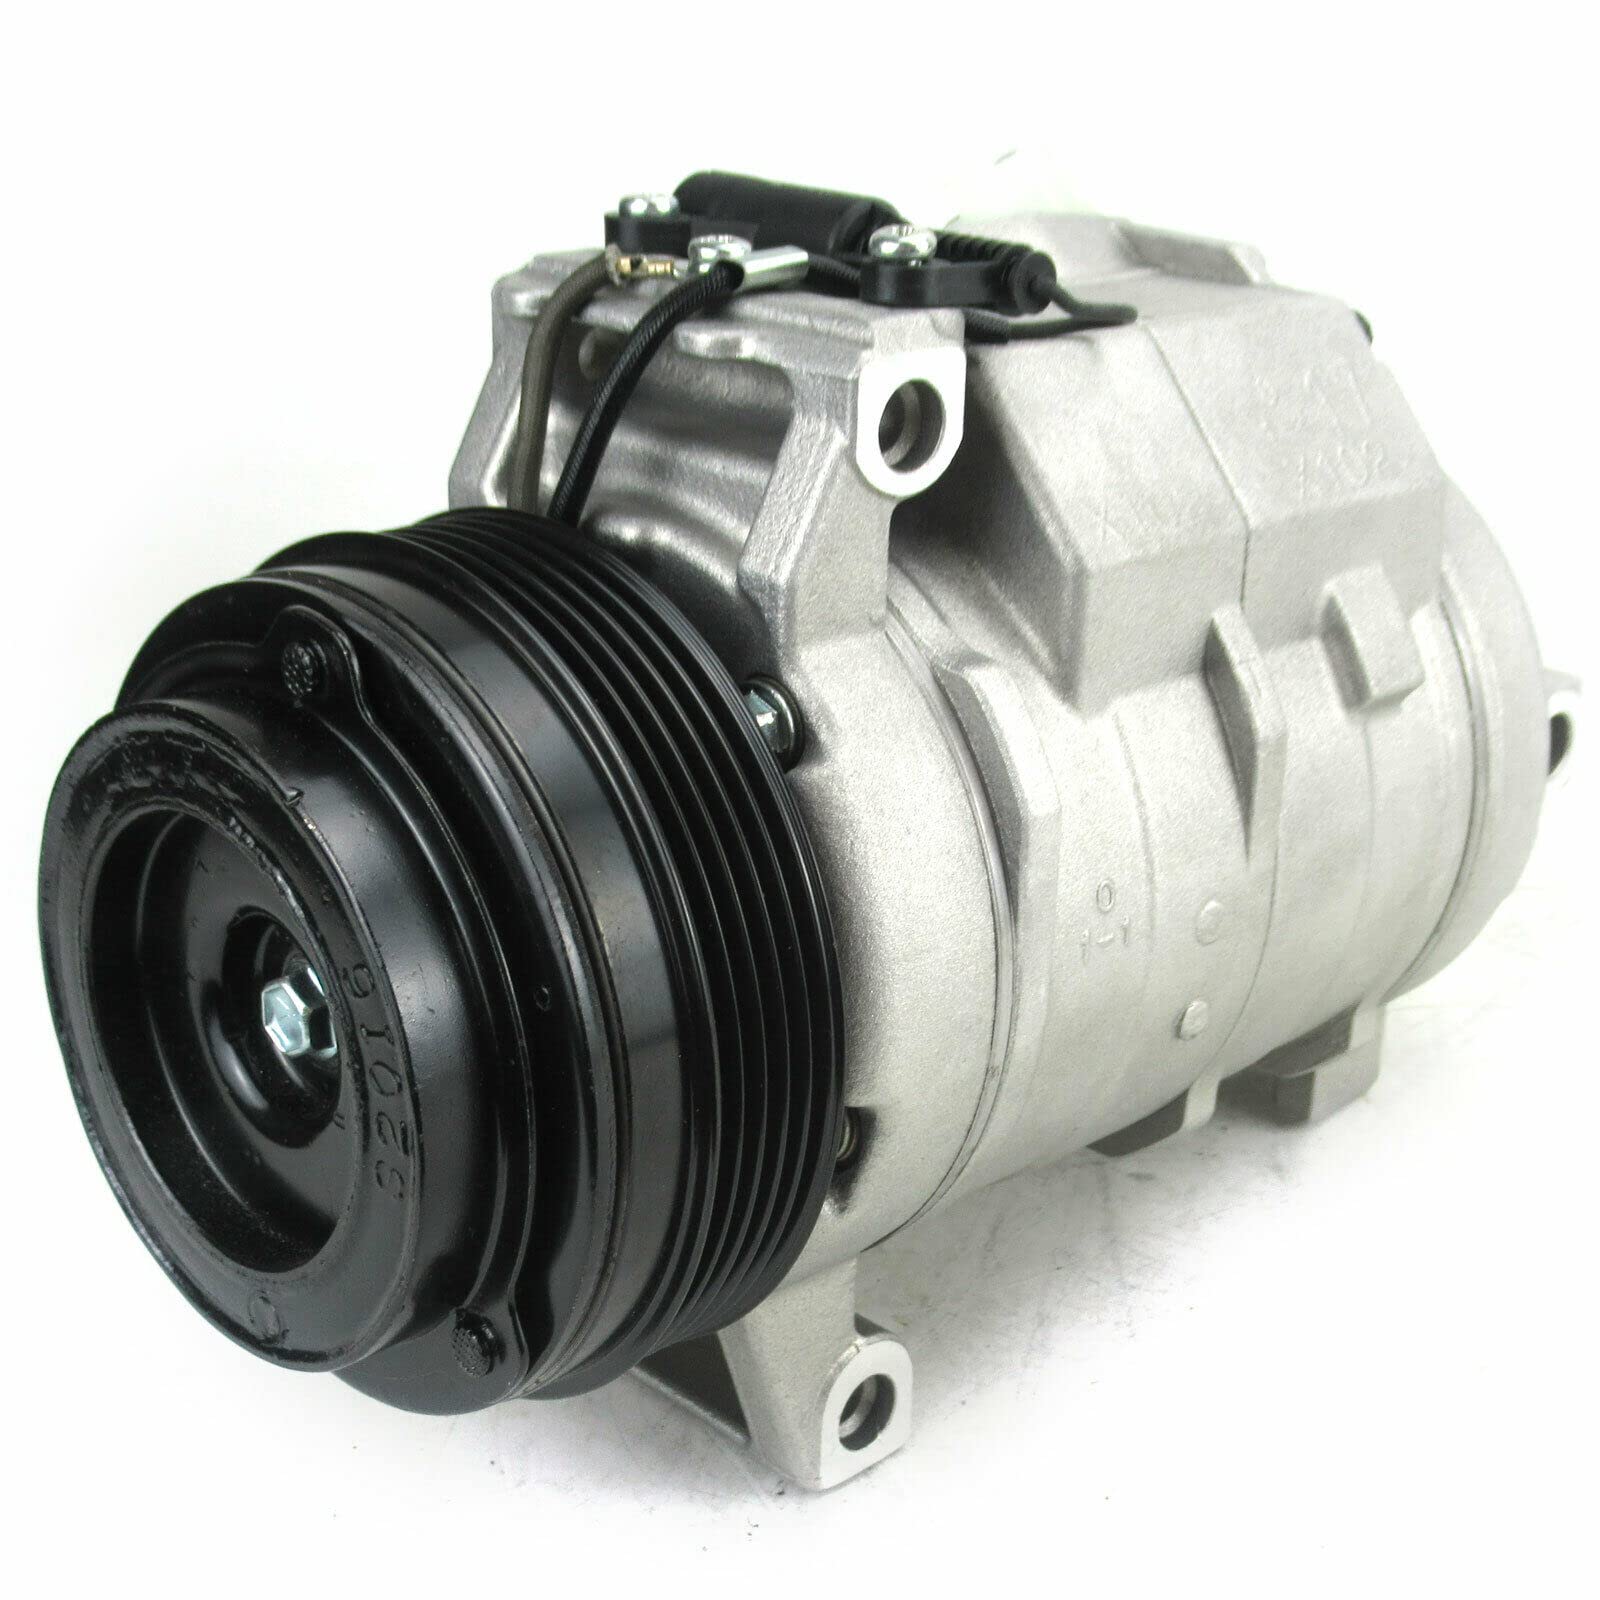 Kompressor Klimakompressor Klimaanlage für BMW X5 E53 3.0i 3.0D 4.4i 2000-2006 64526921650 von SHZICMY